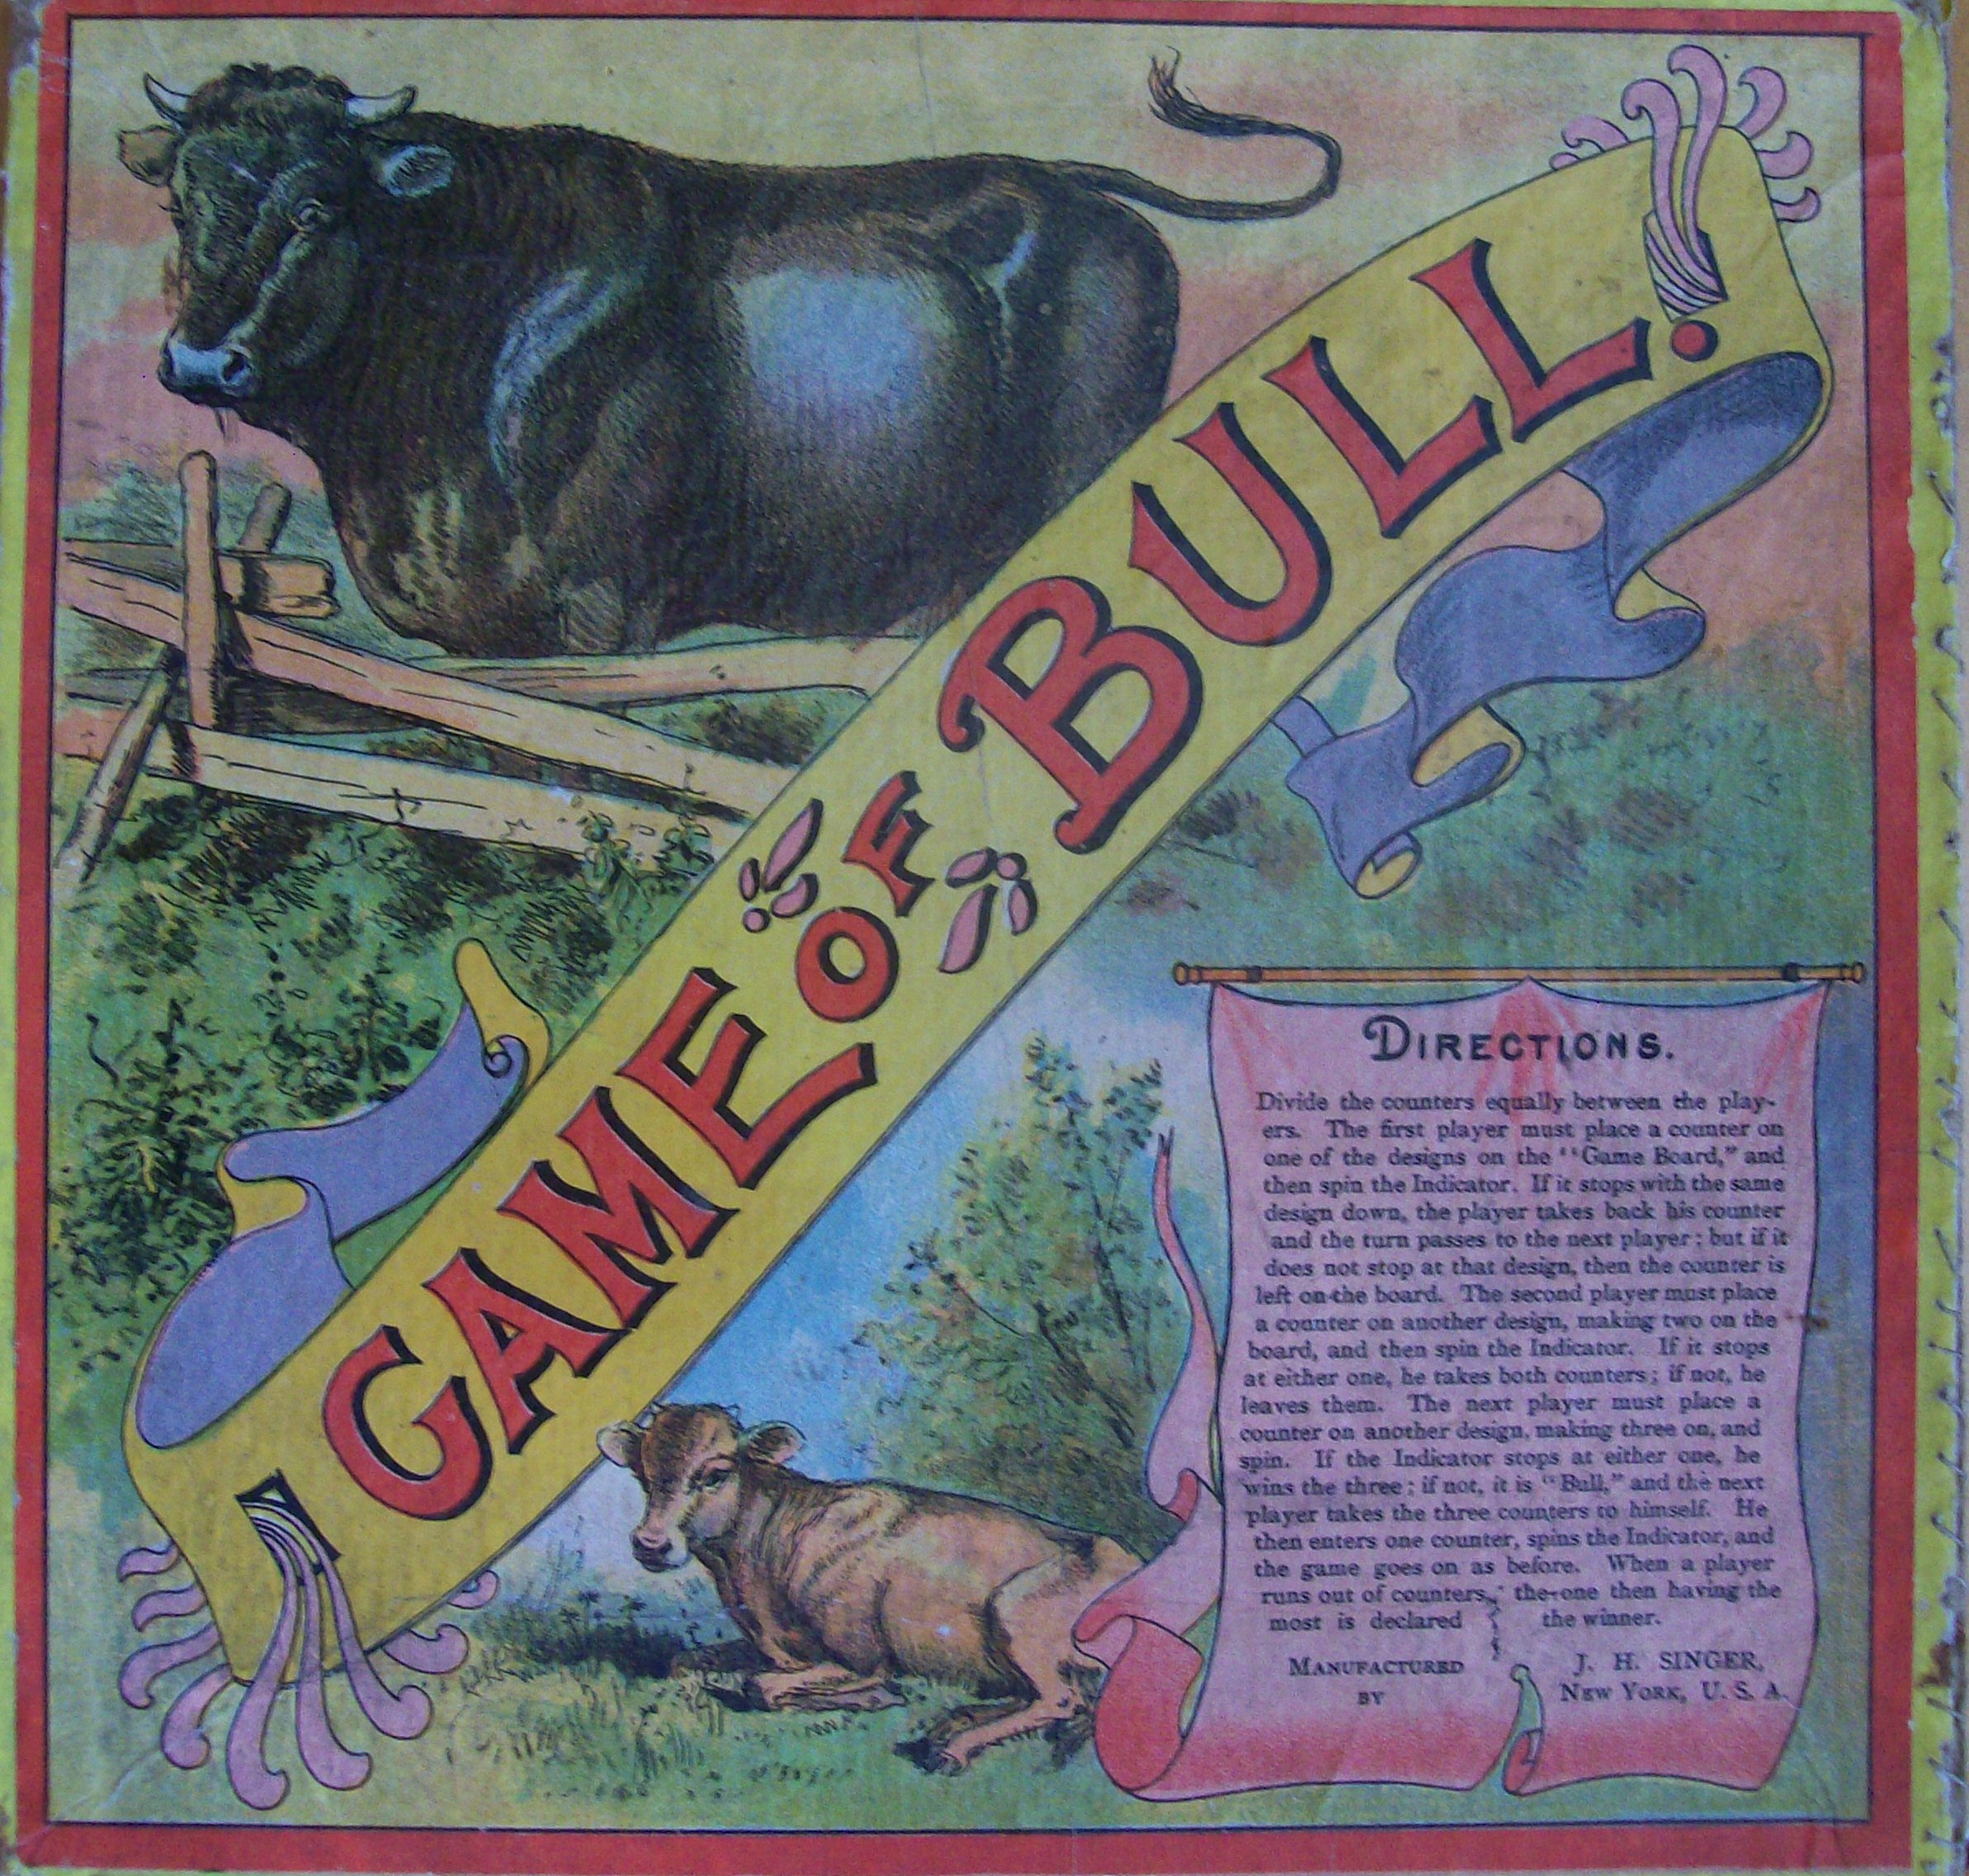 Antique Game of Bull by J.H. Singer